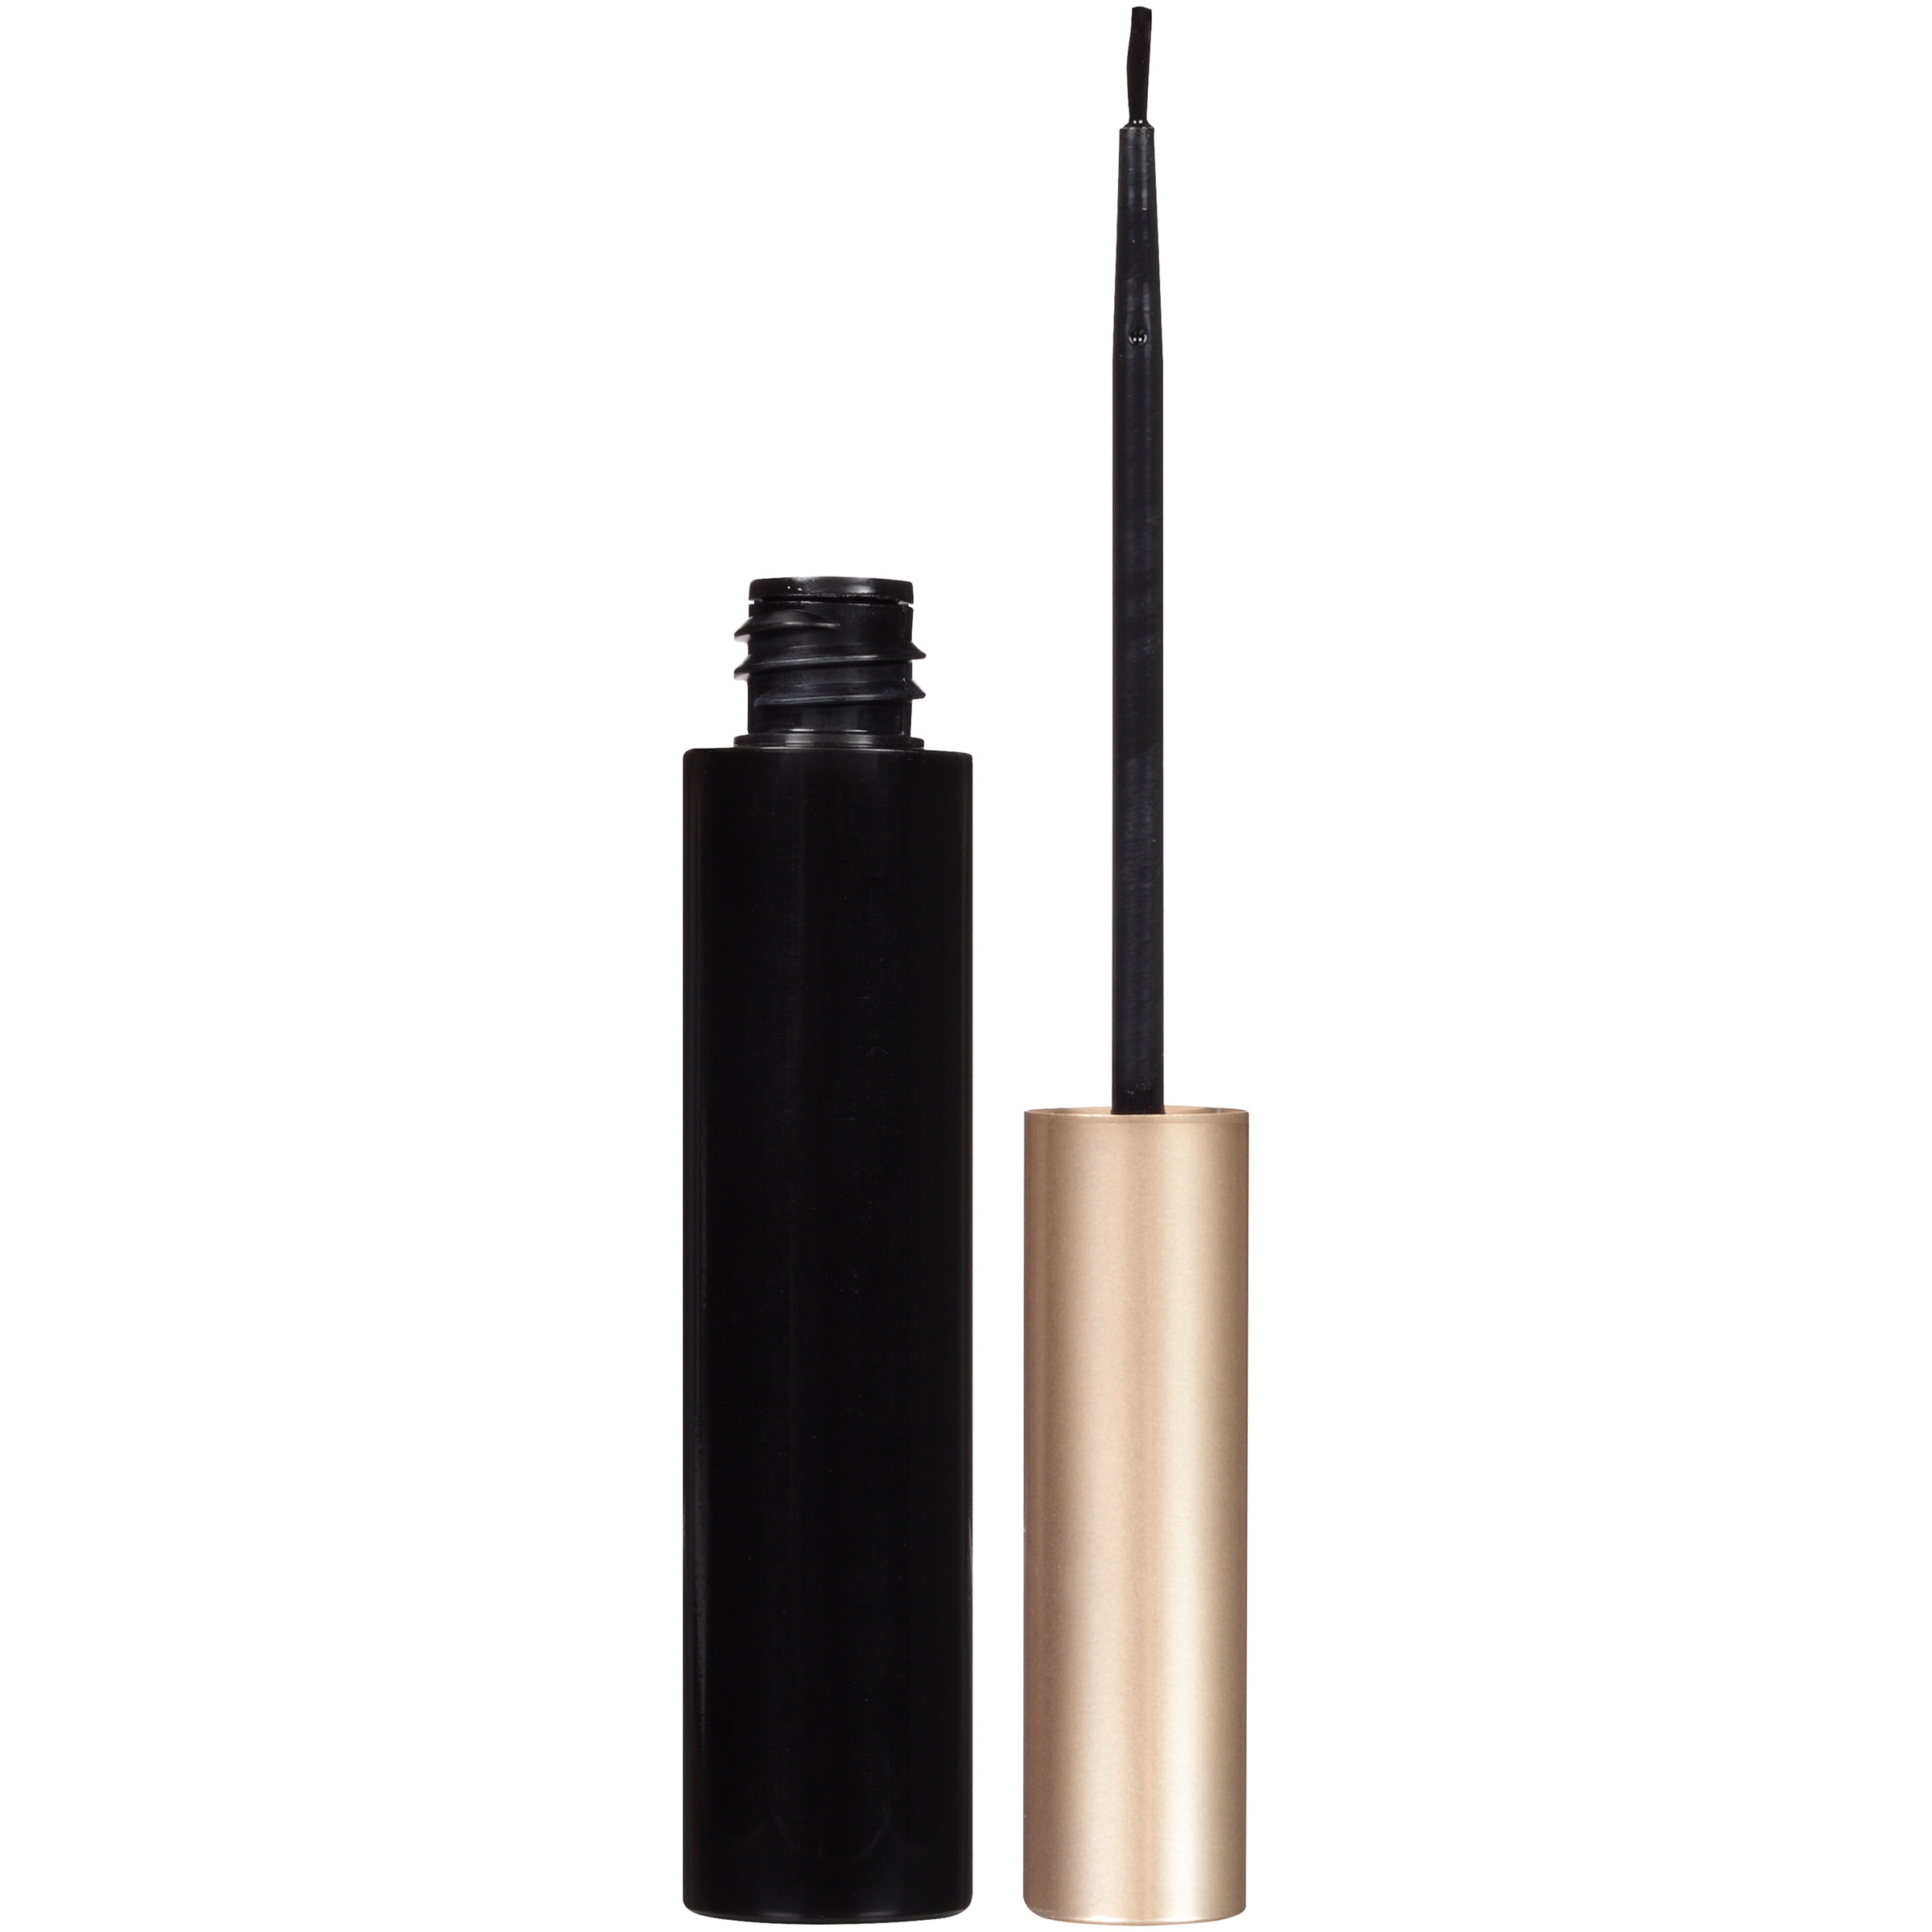 L'Oreal Paris Lineur Intense Brush Tip Liquid Eyeliner, Carbon Black, 0